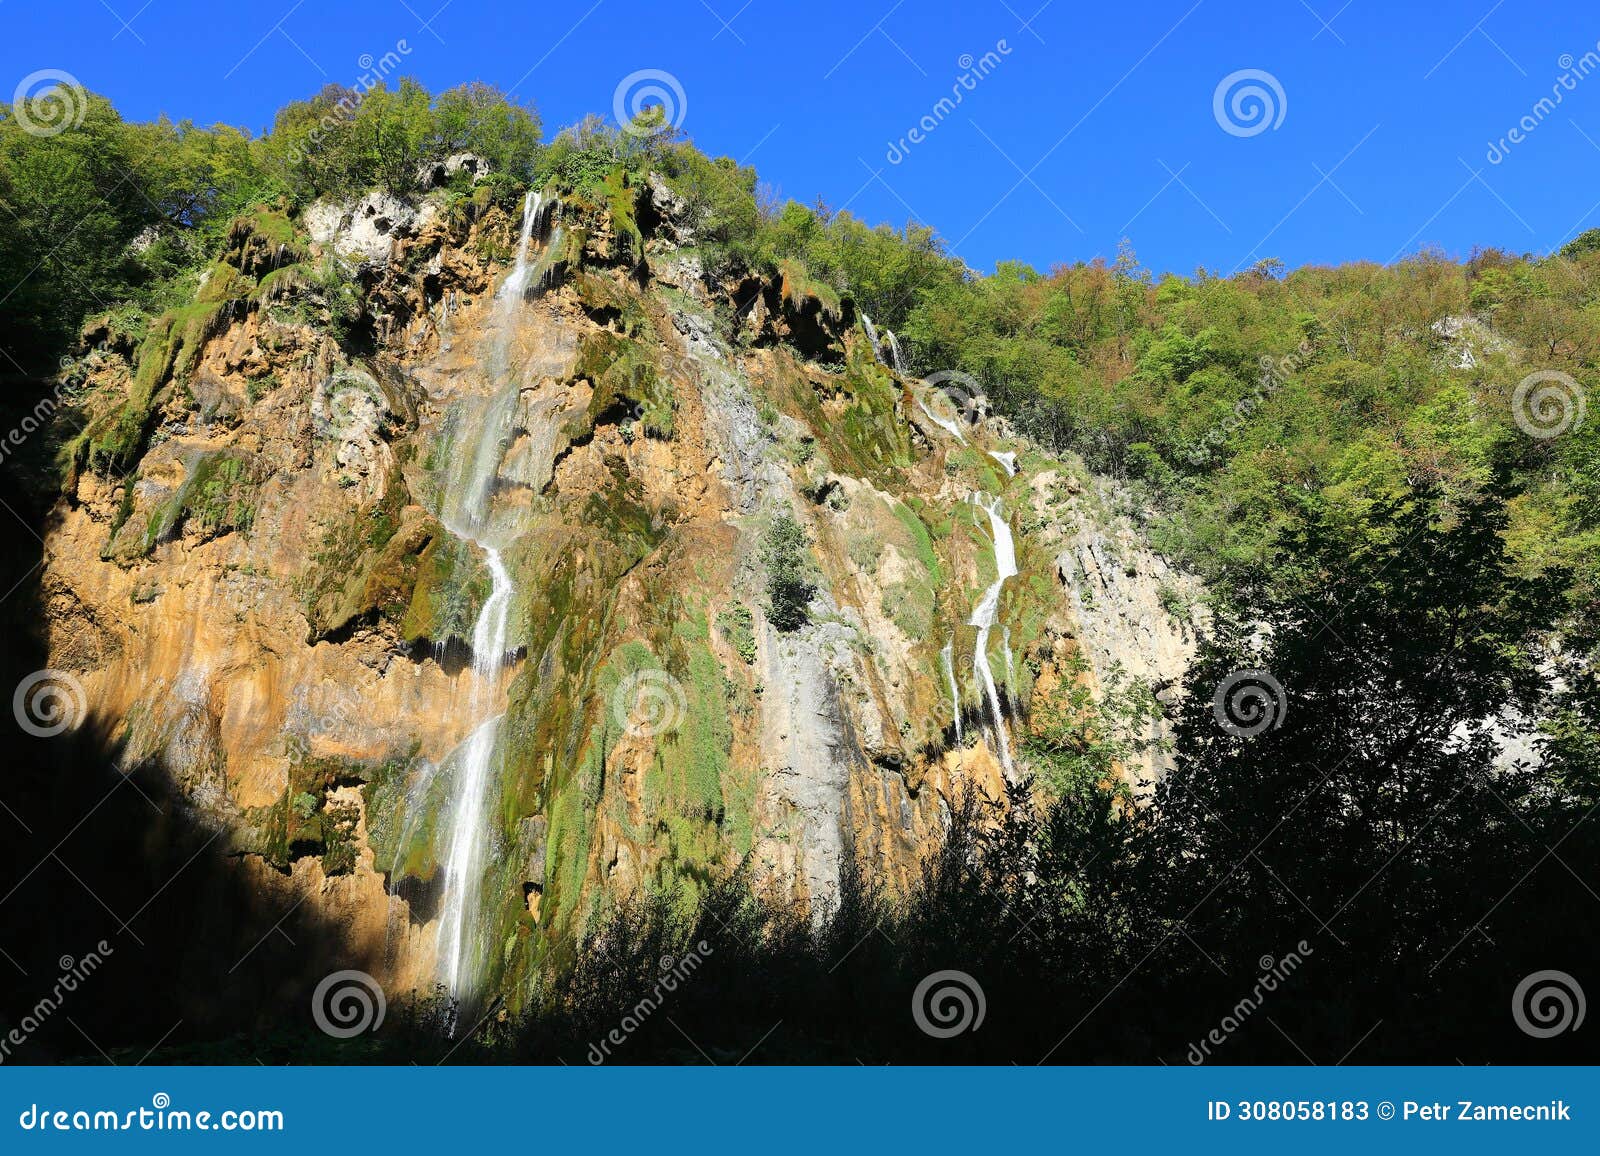 big waterfall on plitvicka jezera in croatia